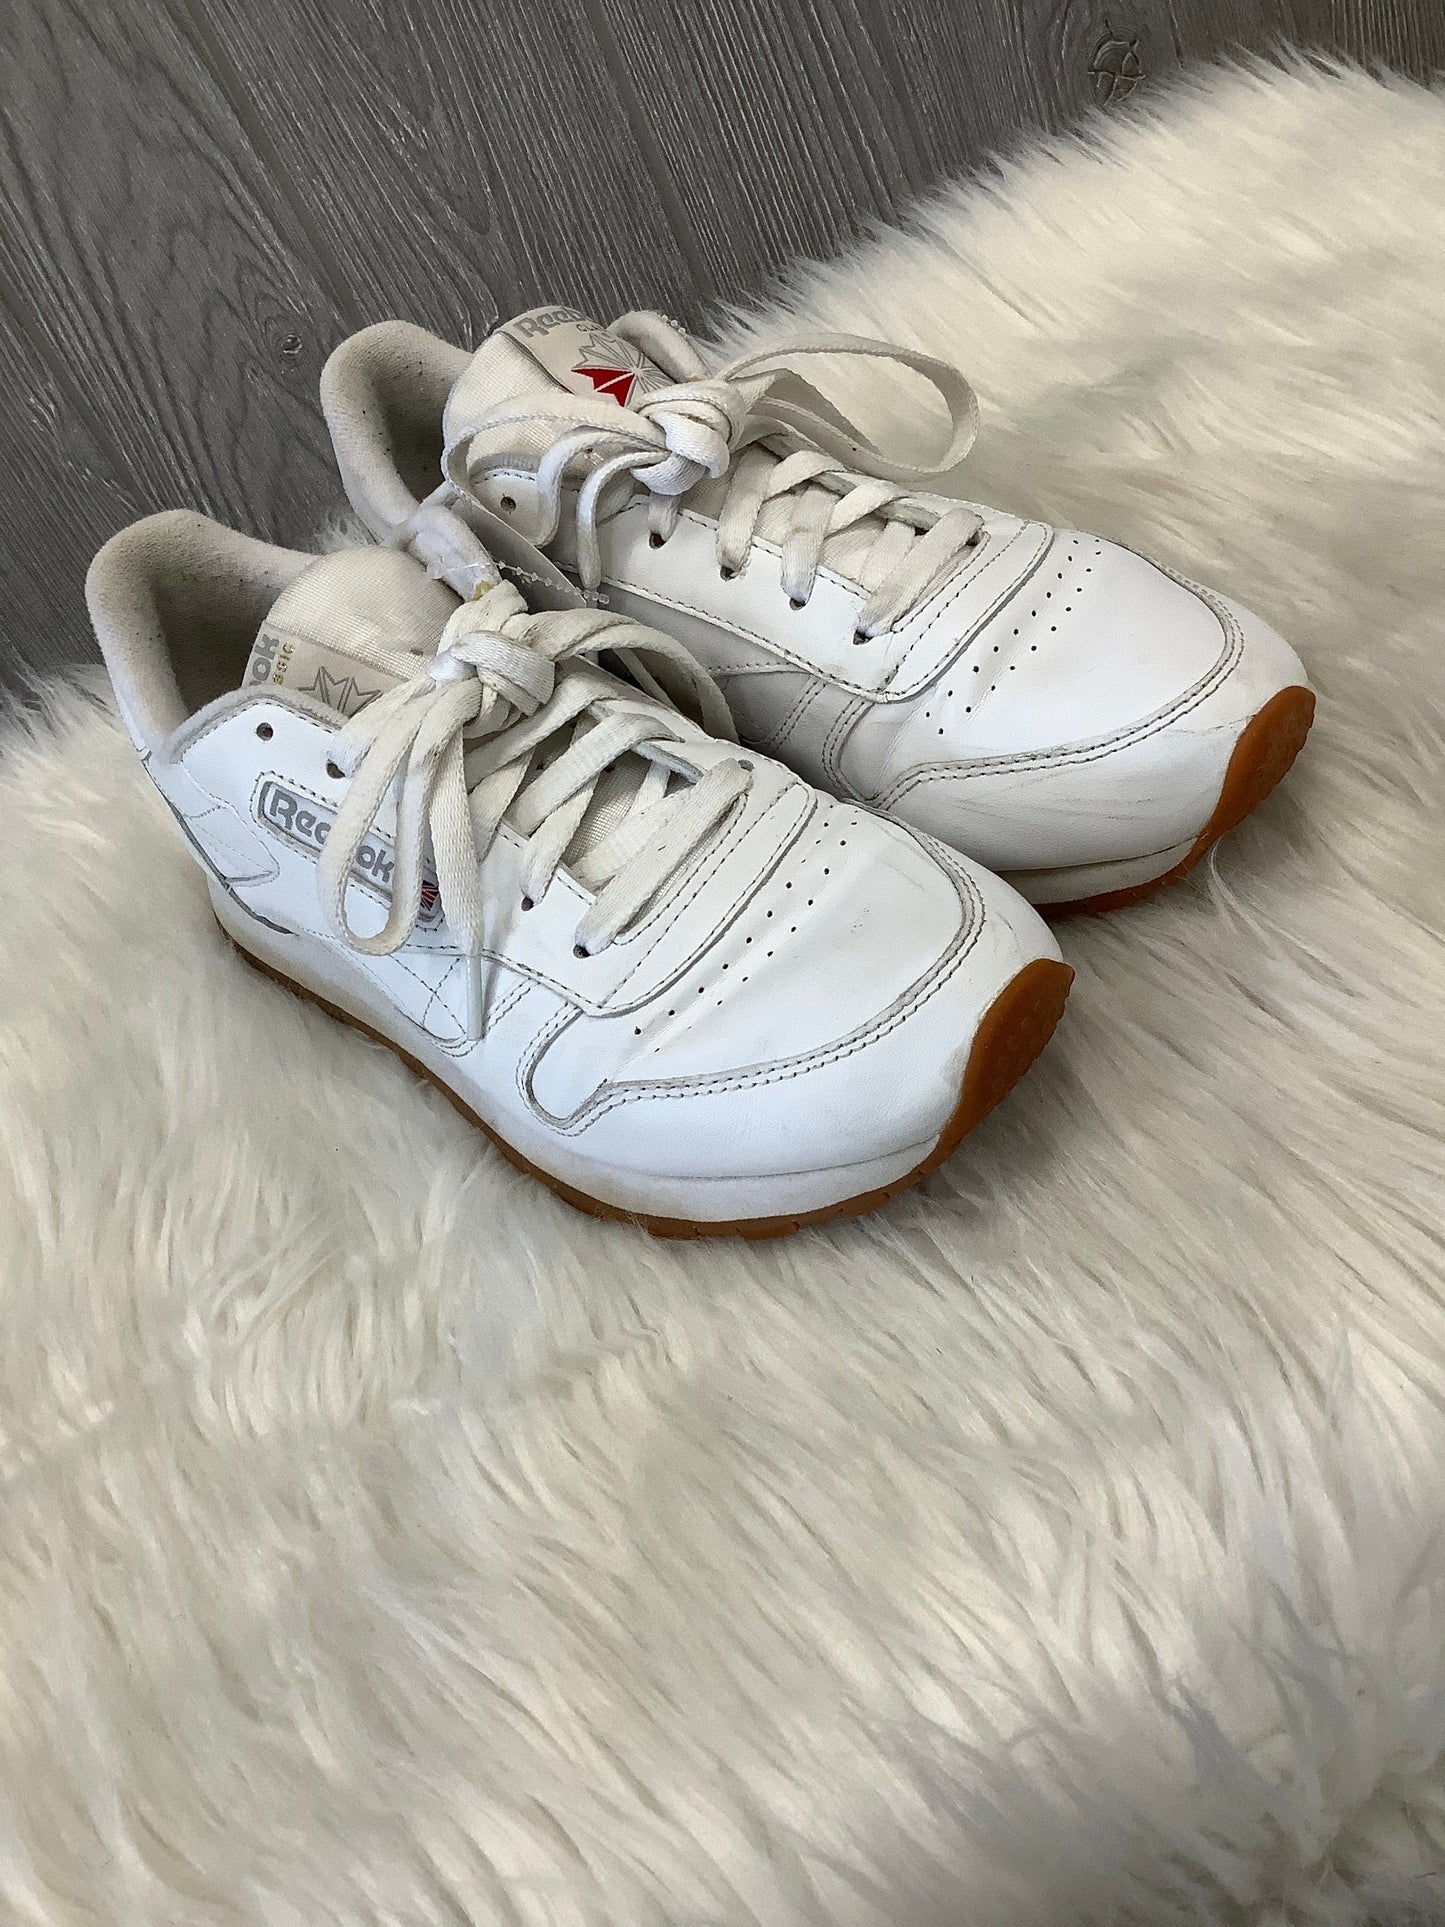 White Shoes Sneakers Reebok, Size 9.5